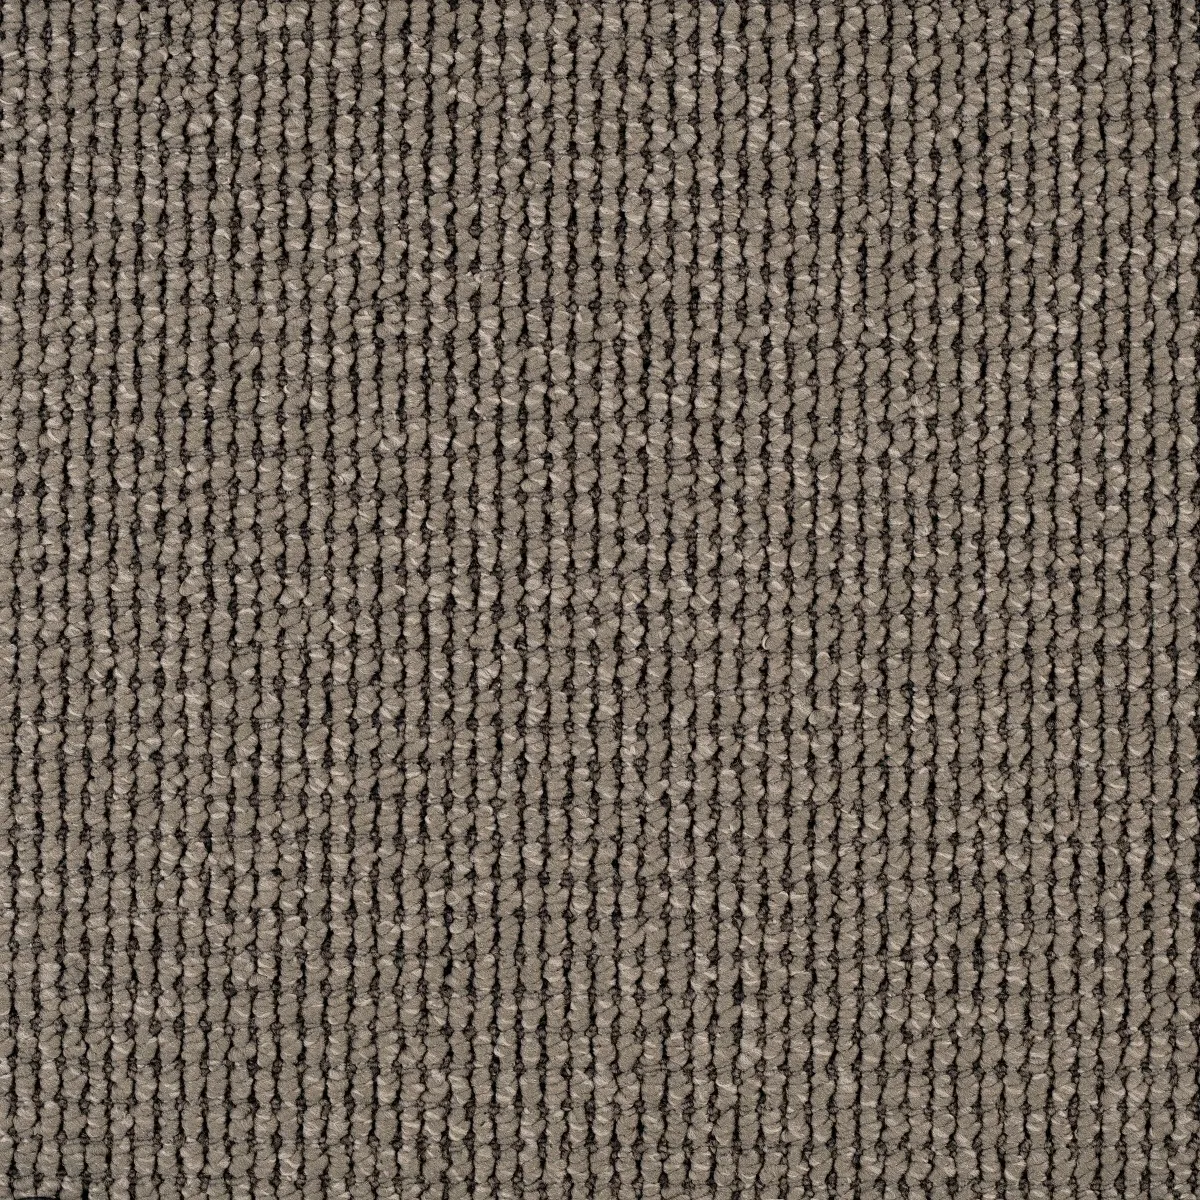 Frontier Carpet range in Terra colour